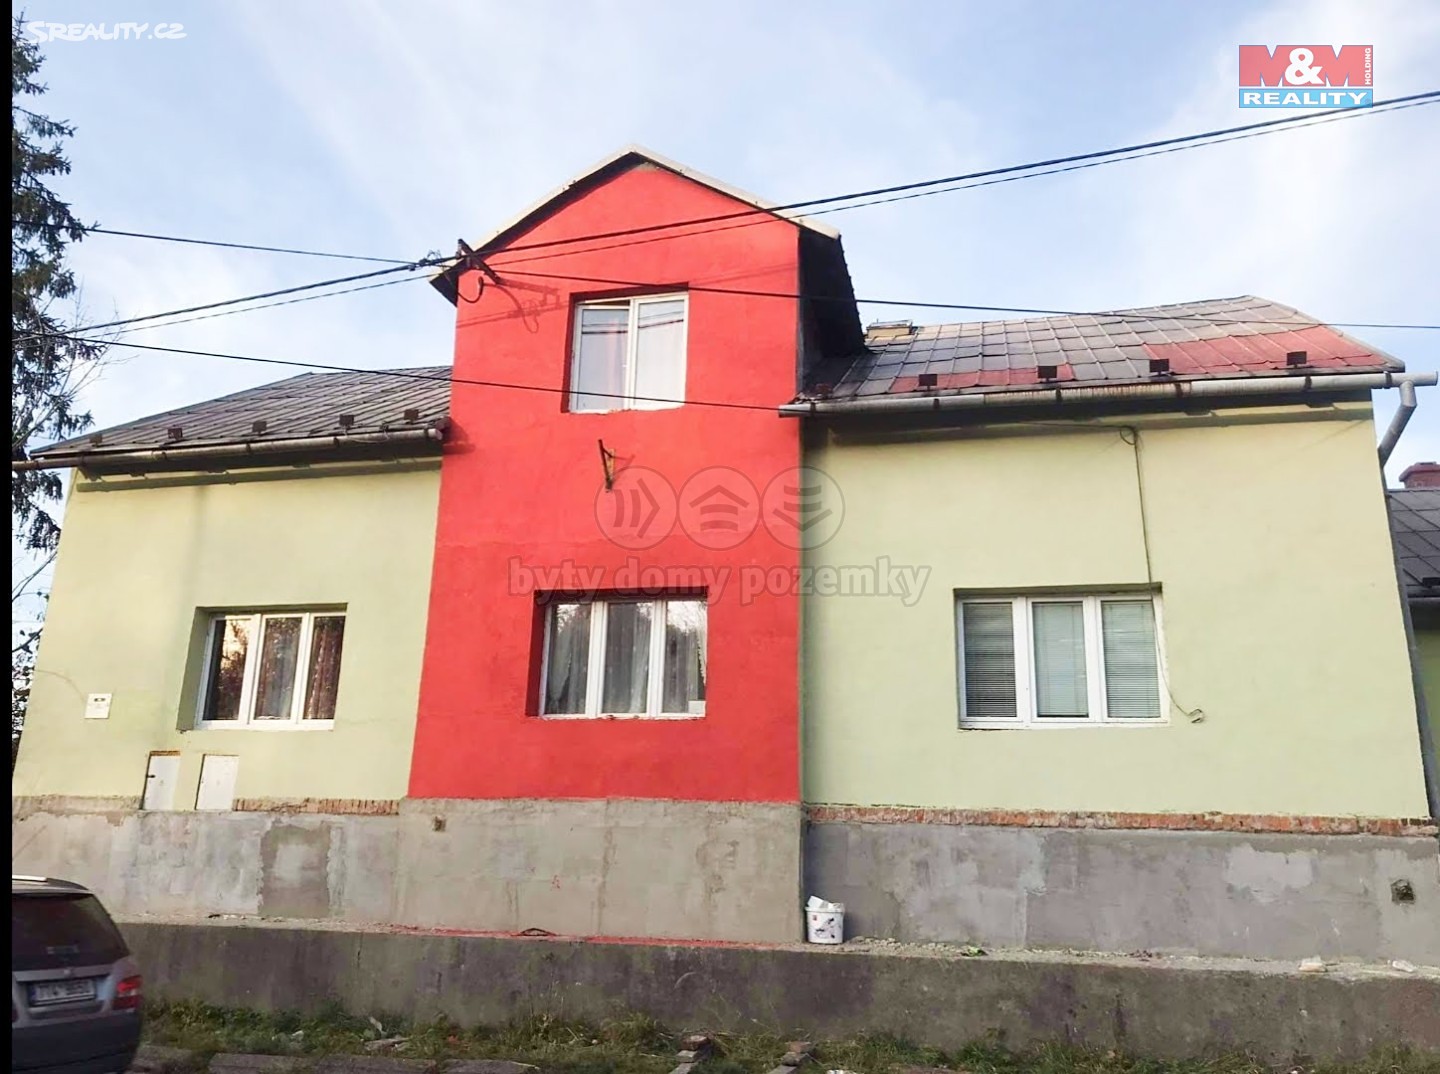 Prodej  rodinného domu 170 m², pozemek 694 m², Orlová - Poruba, okres Karviná